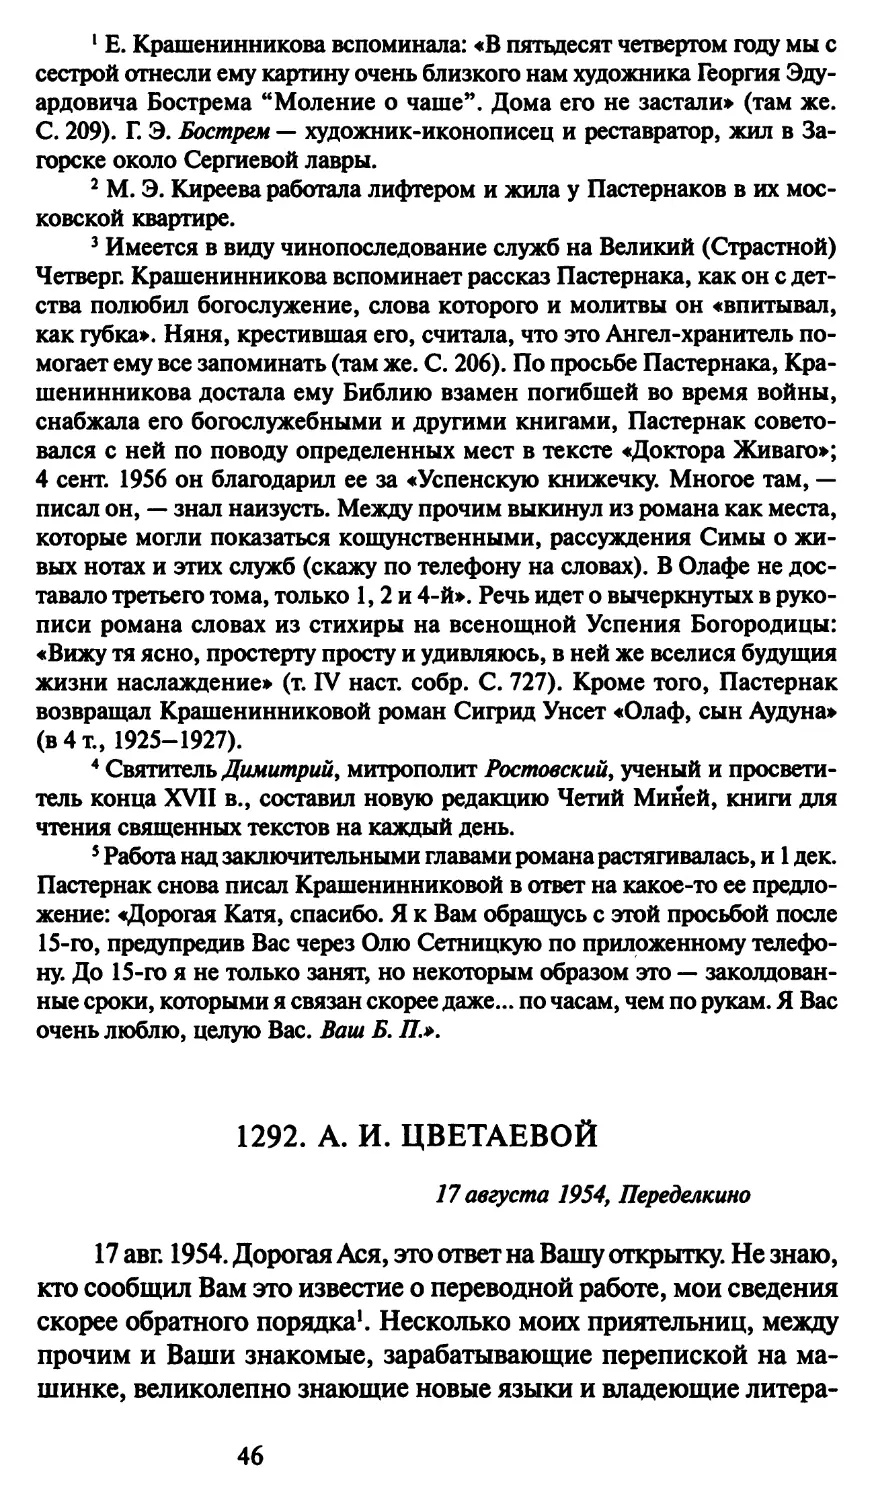 1292. А. И. Цветаевой 17 августа 1954